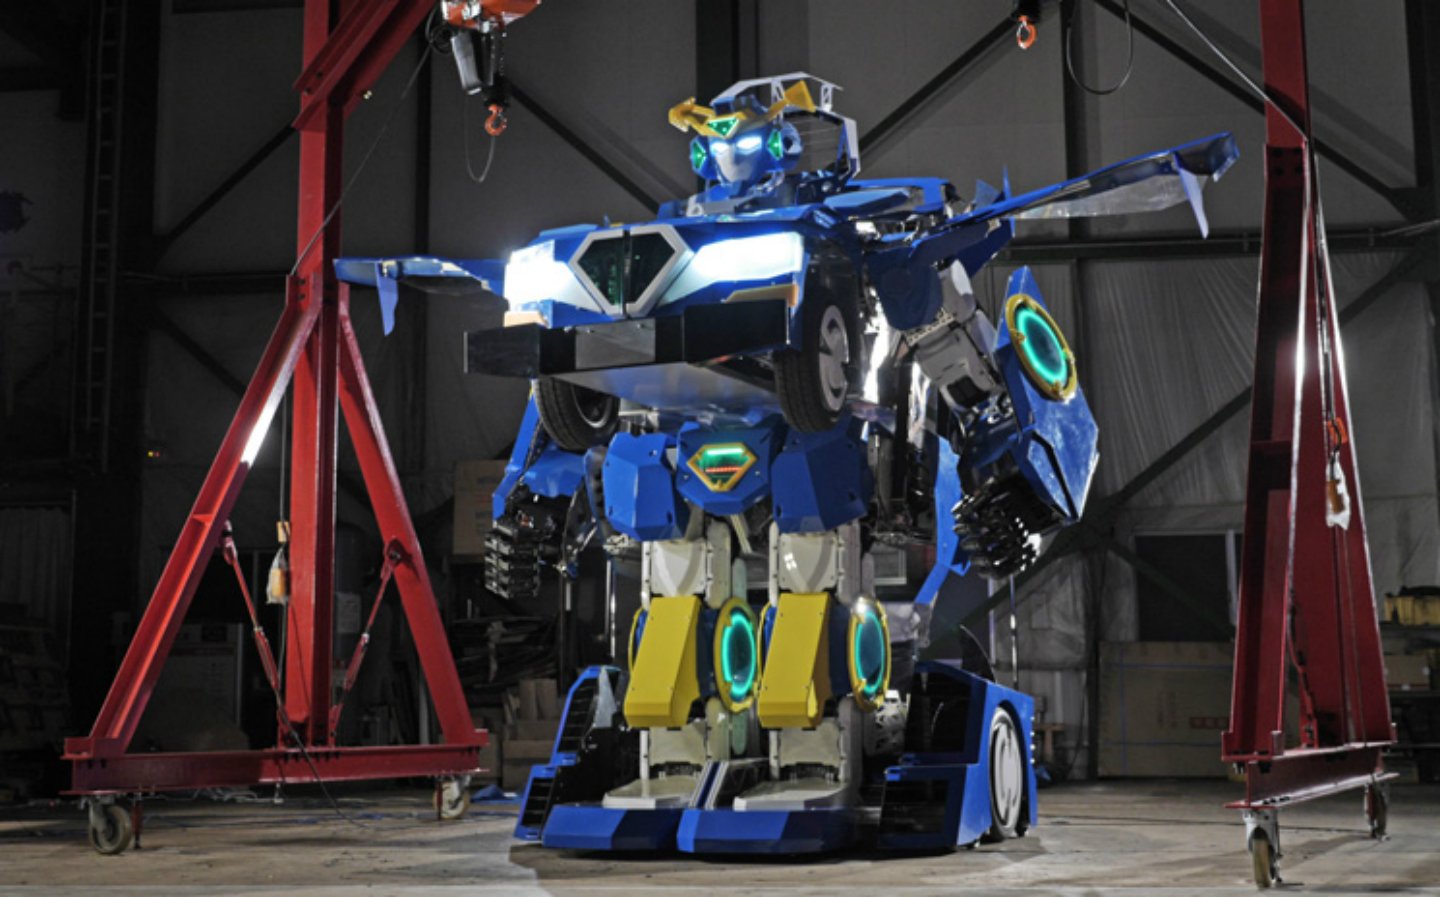 J-Diete-Ride-Transformer-car robot